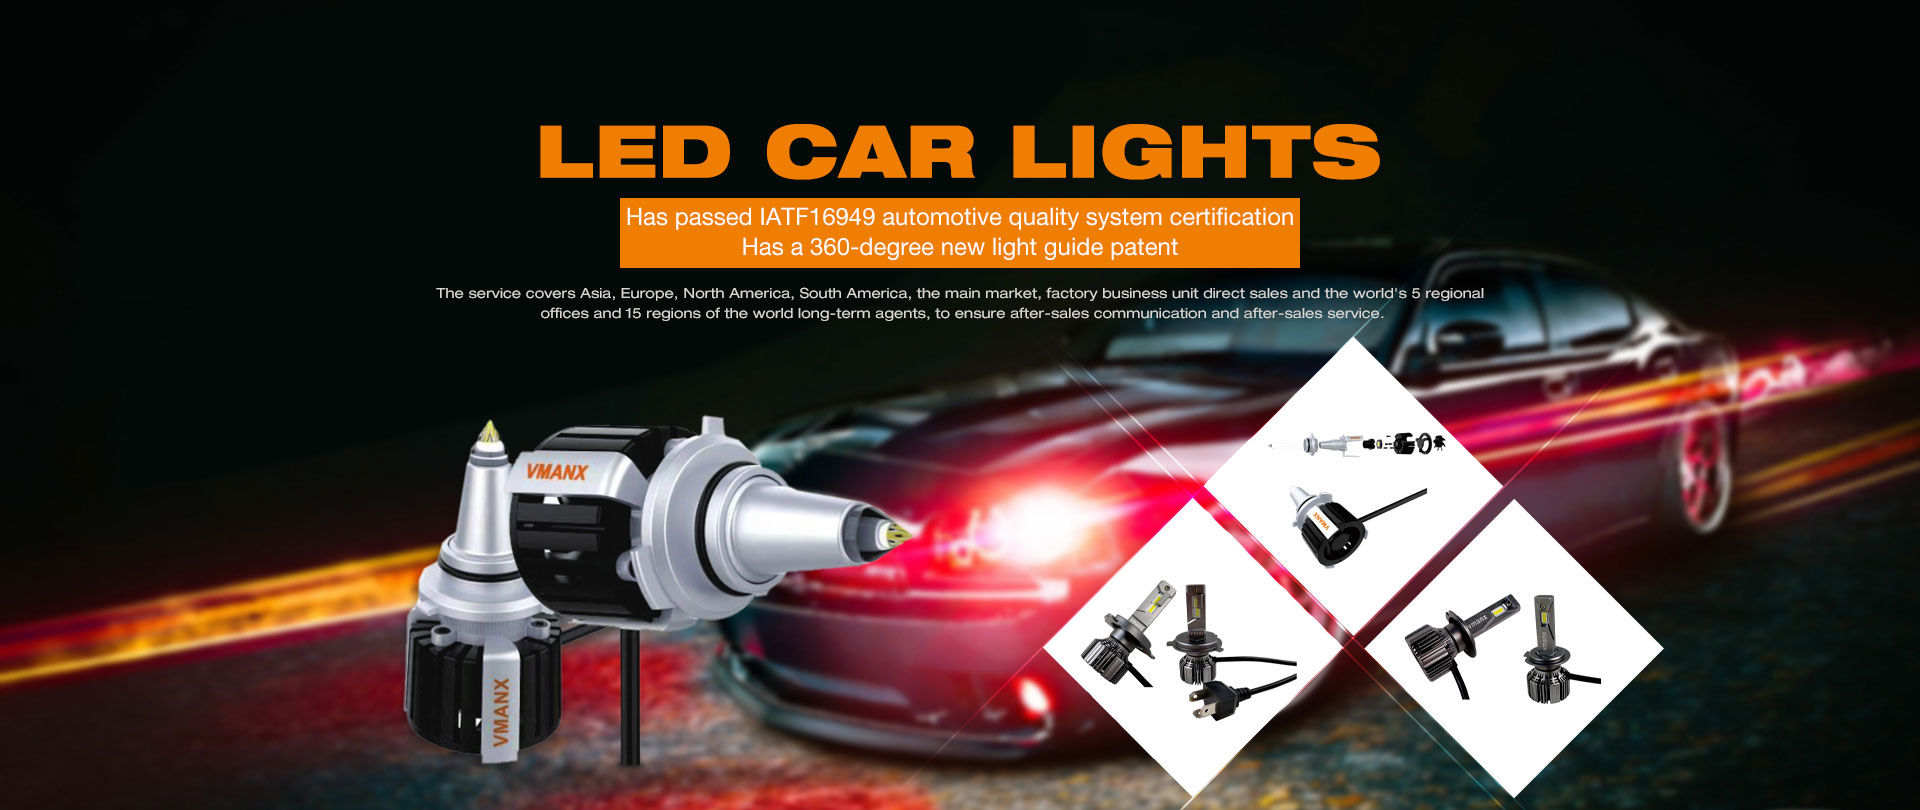 Led car lights